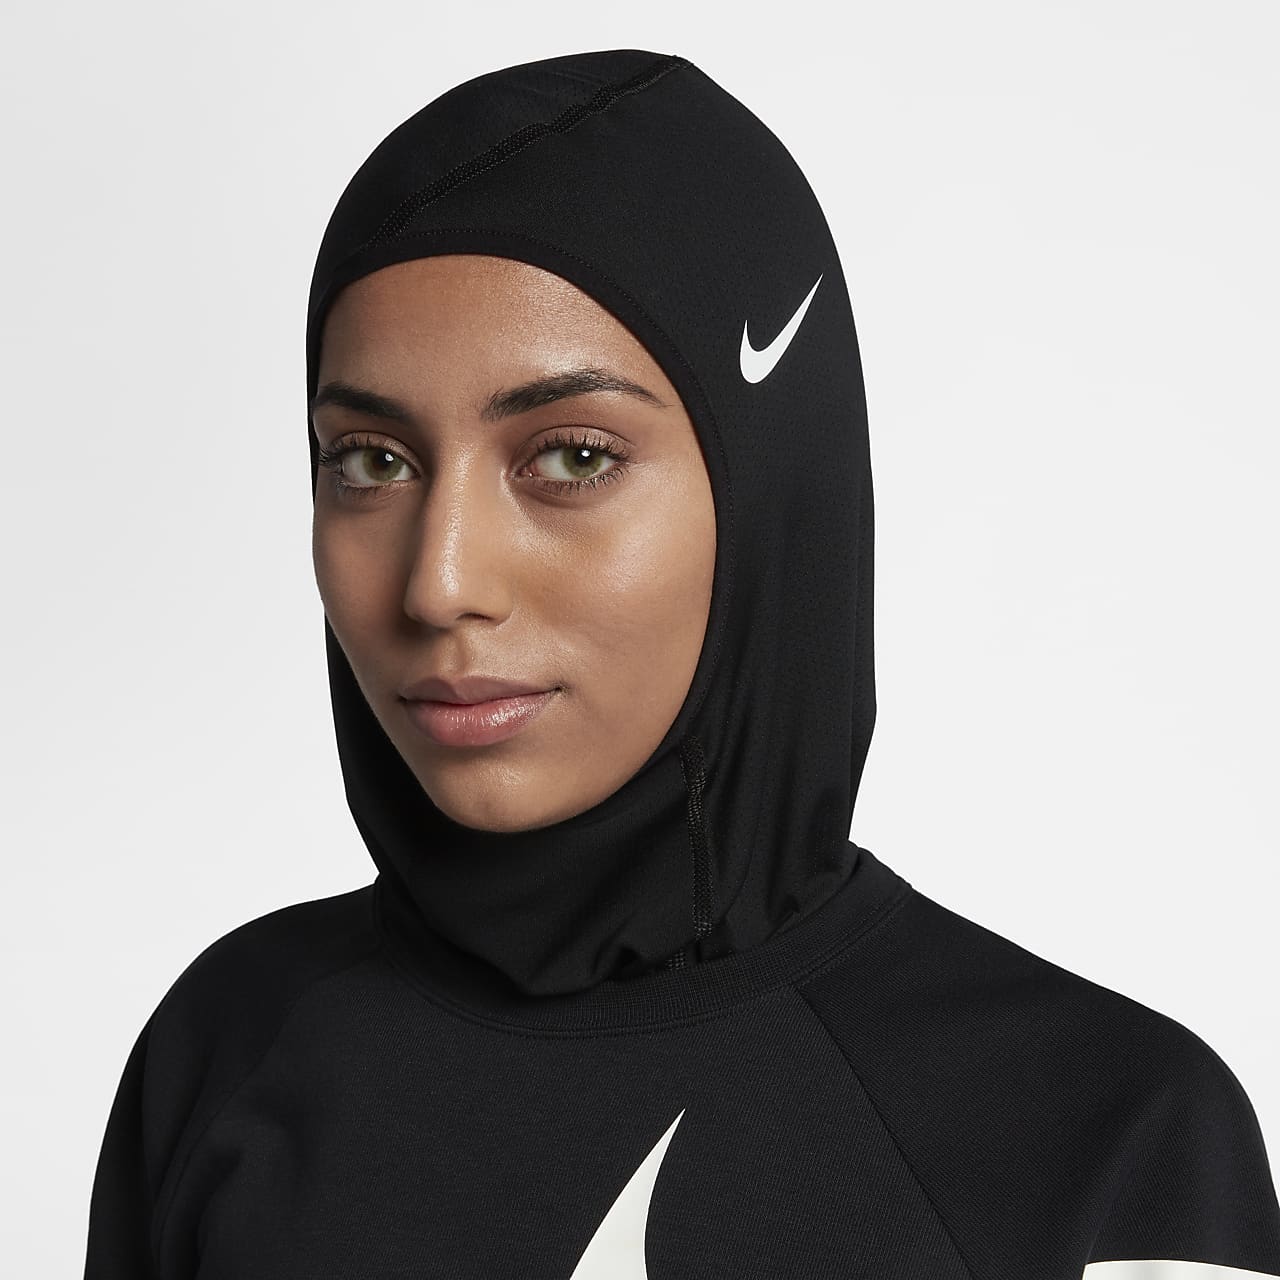 nike pro hijab 2.0 review